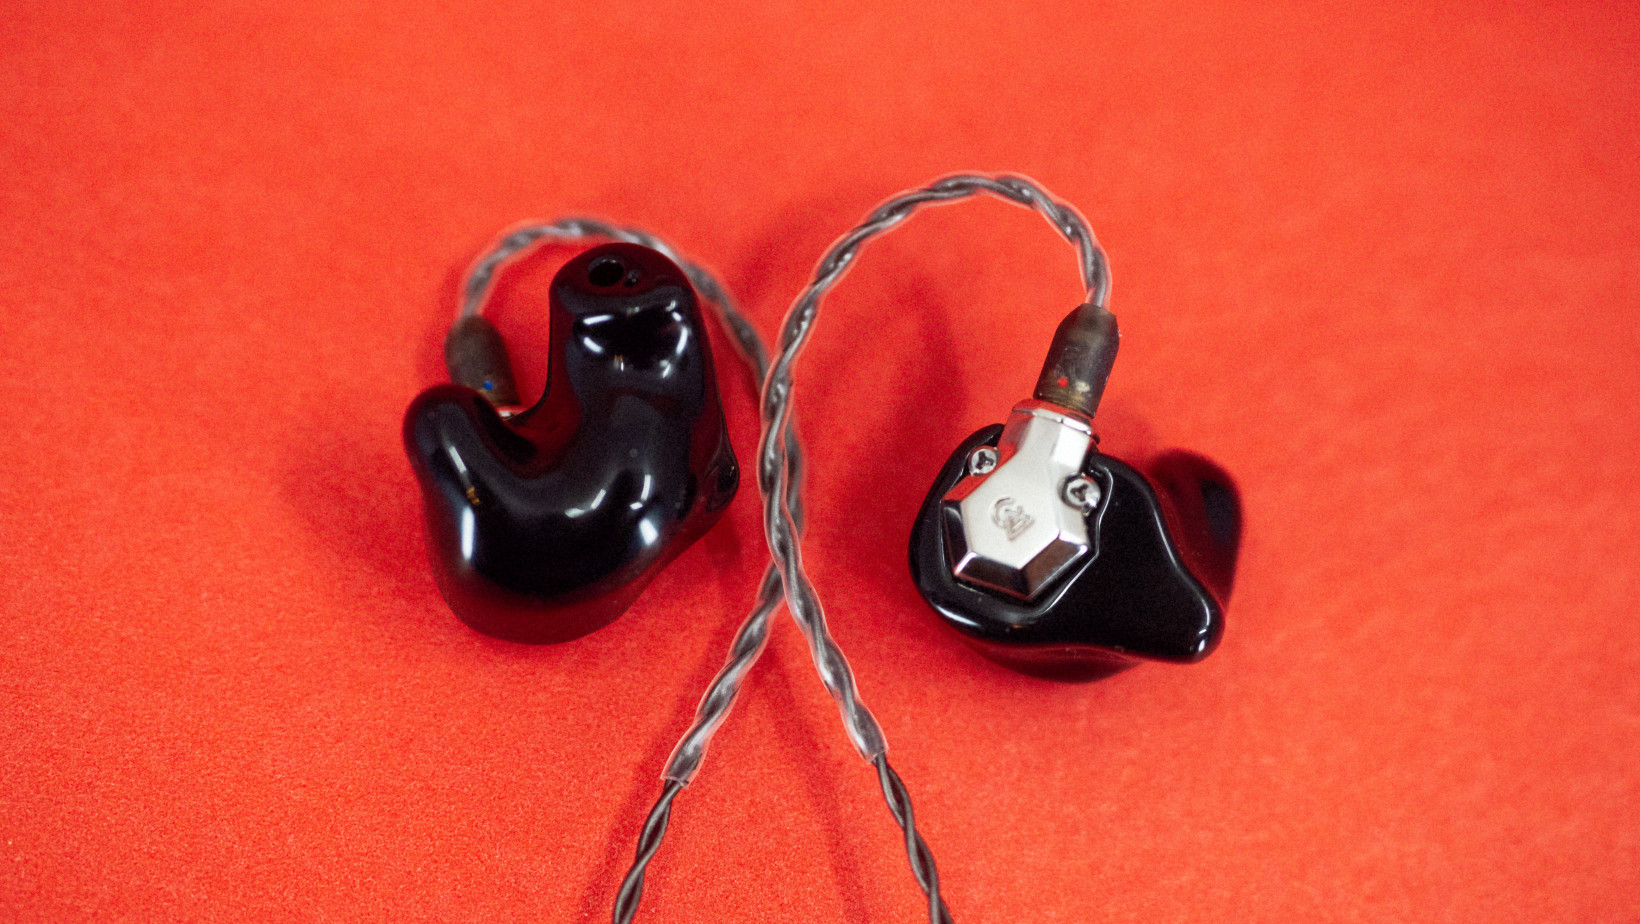 Campfire Audio Solstice custom earbuds